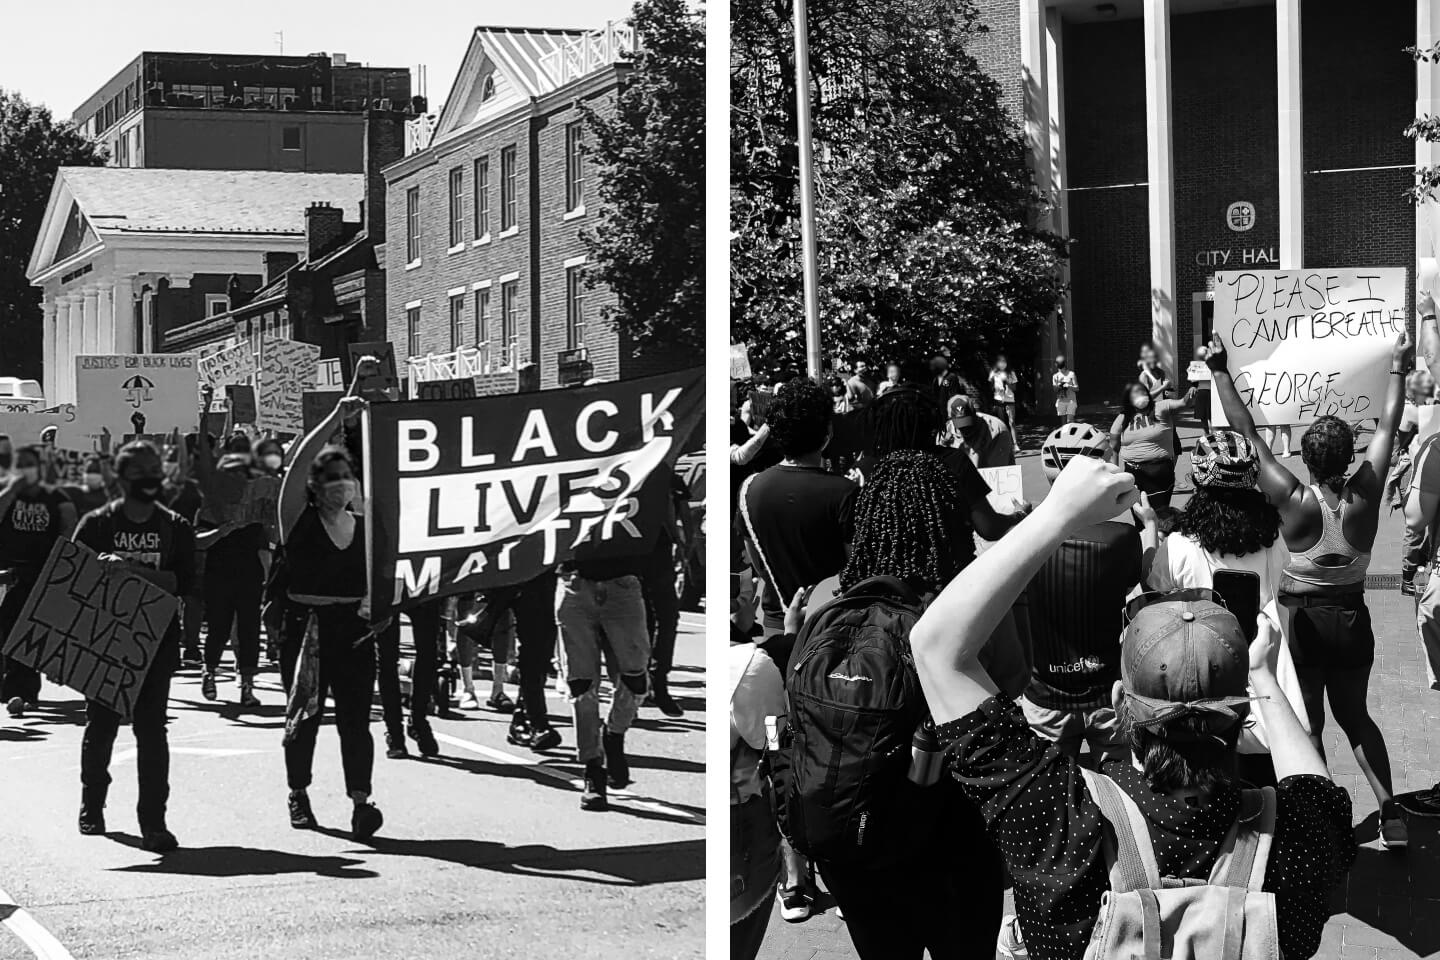 Black Lives Matter protestors in Charlottesville, Virginia